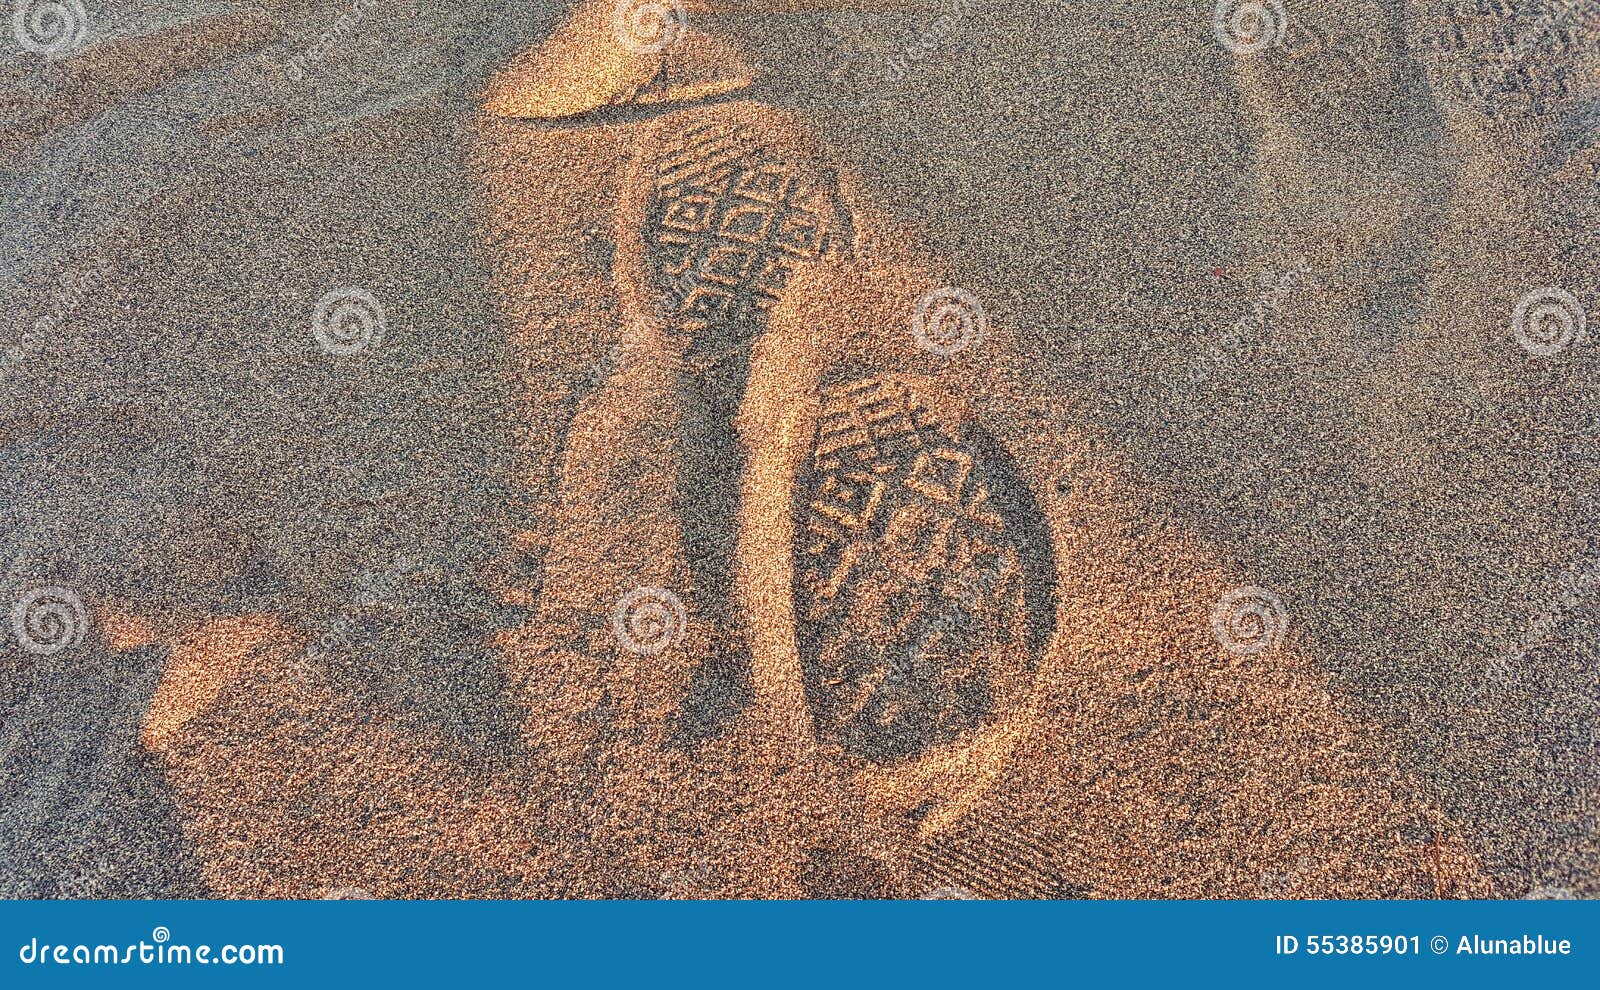 Converse Sand Footprint stock image 